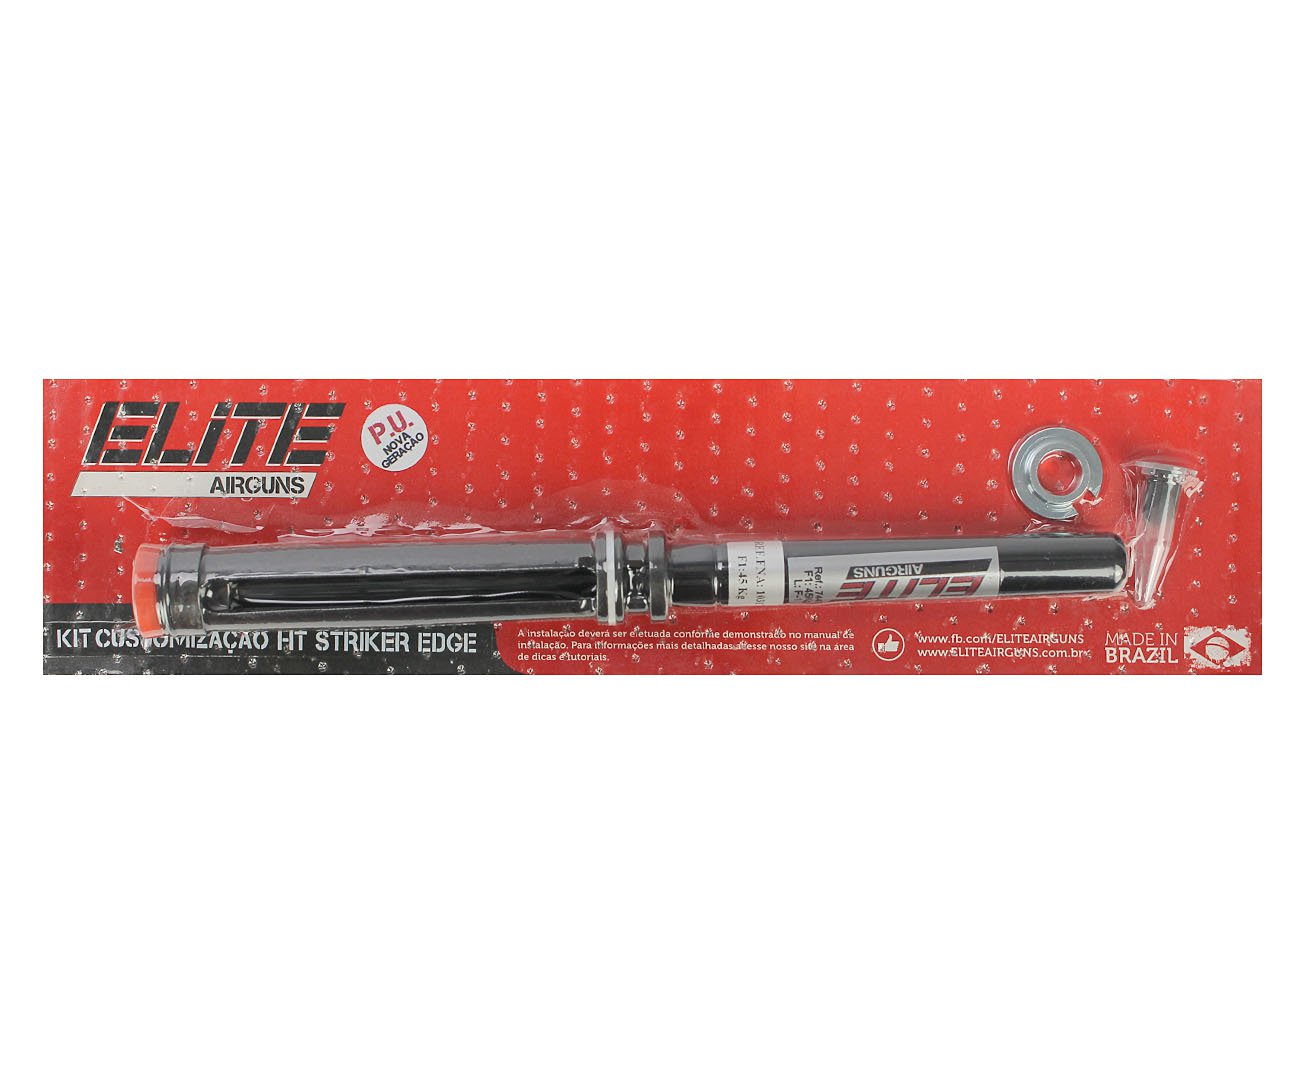 Kit De Customização Advanced Ht Striker Edge - 45 Kg - Elite Airguns